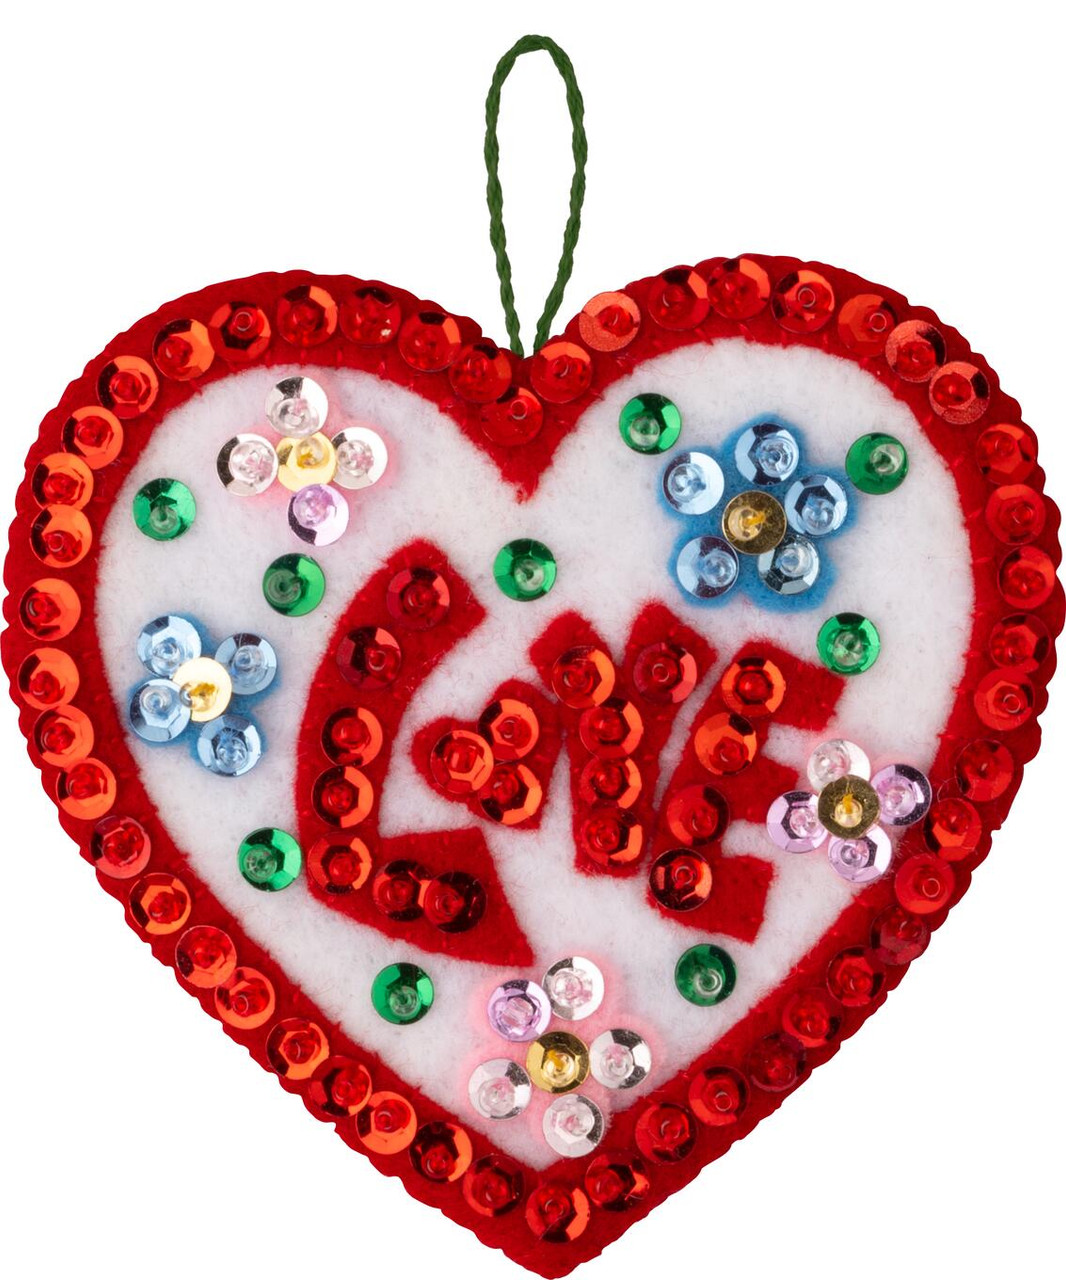 Shop Plaid Bucilla ® Seasonal - Felt - Ornament Kits - Peace and